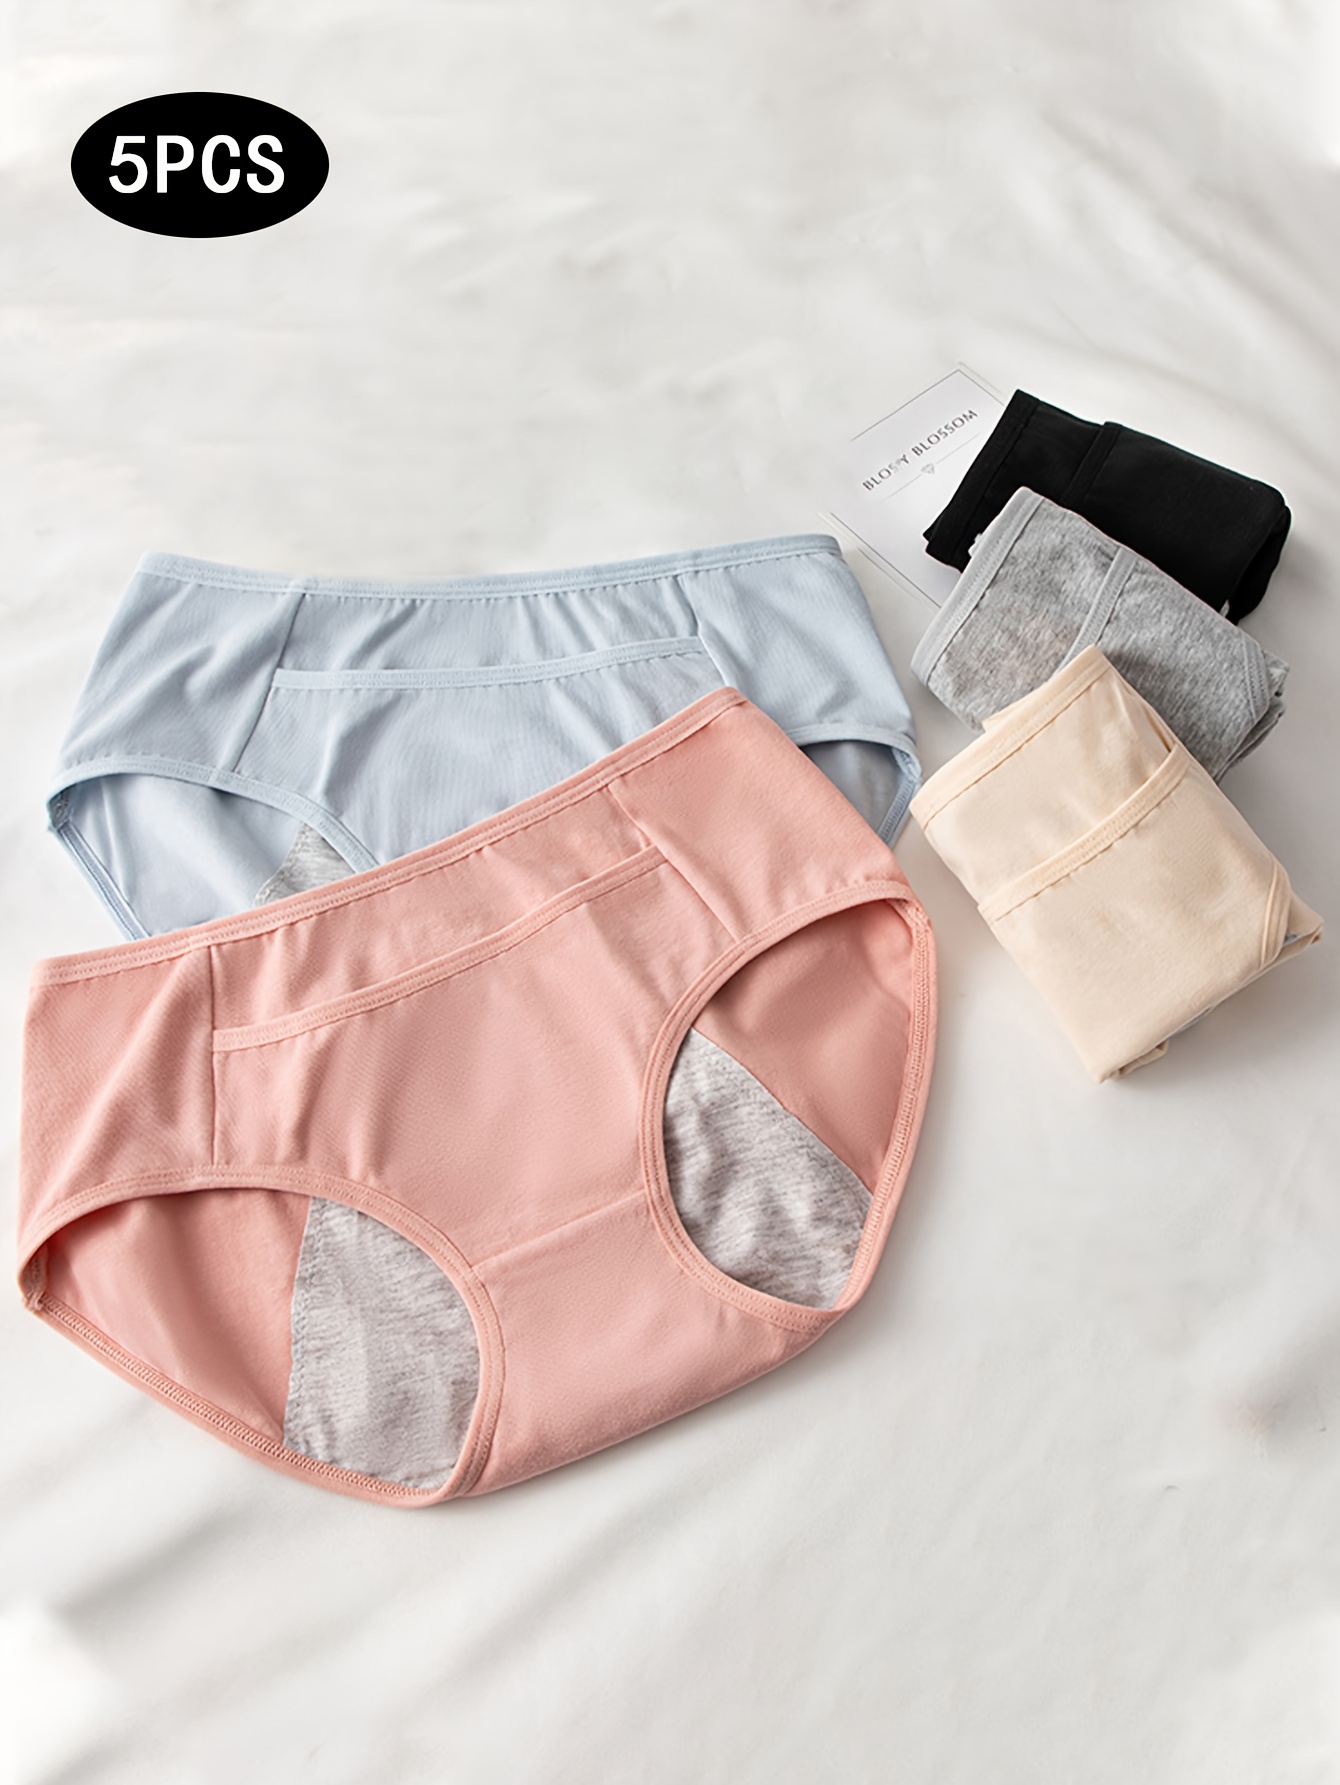 Women's Underwear with A Secret Front Pocket Cotton Panties Travel